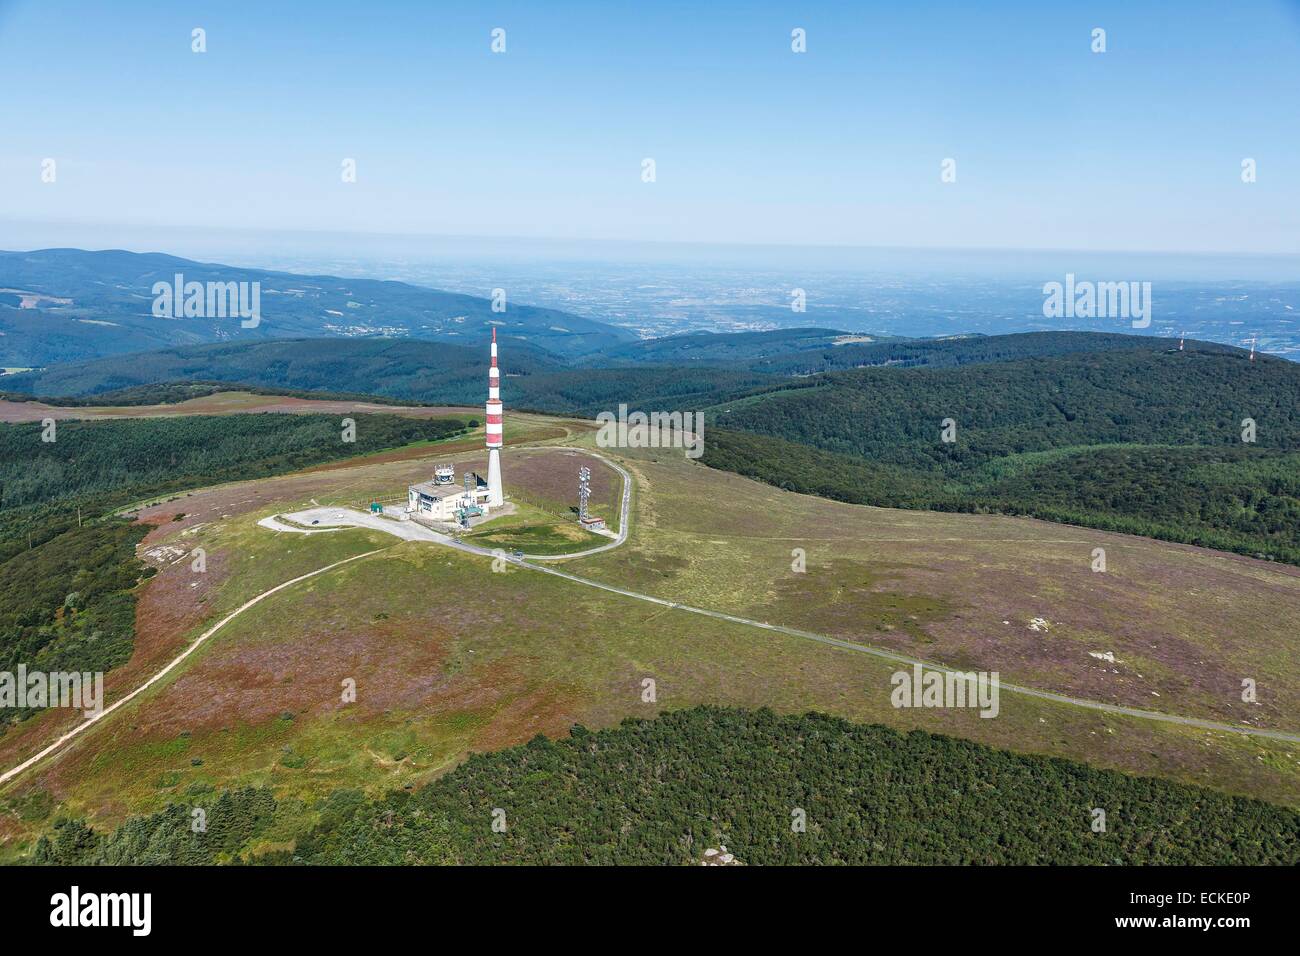 France Aude, Pradelles Cabardes, Montagne Noire, Pic de Nore, tΘlΘvision antenna (aerial view) Stock Photo